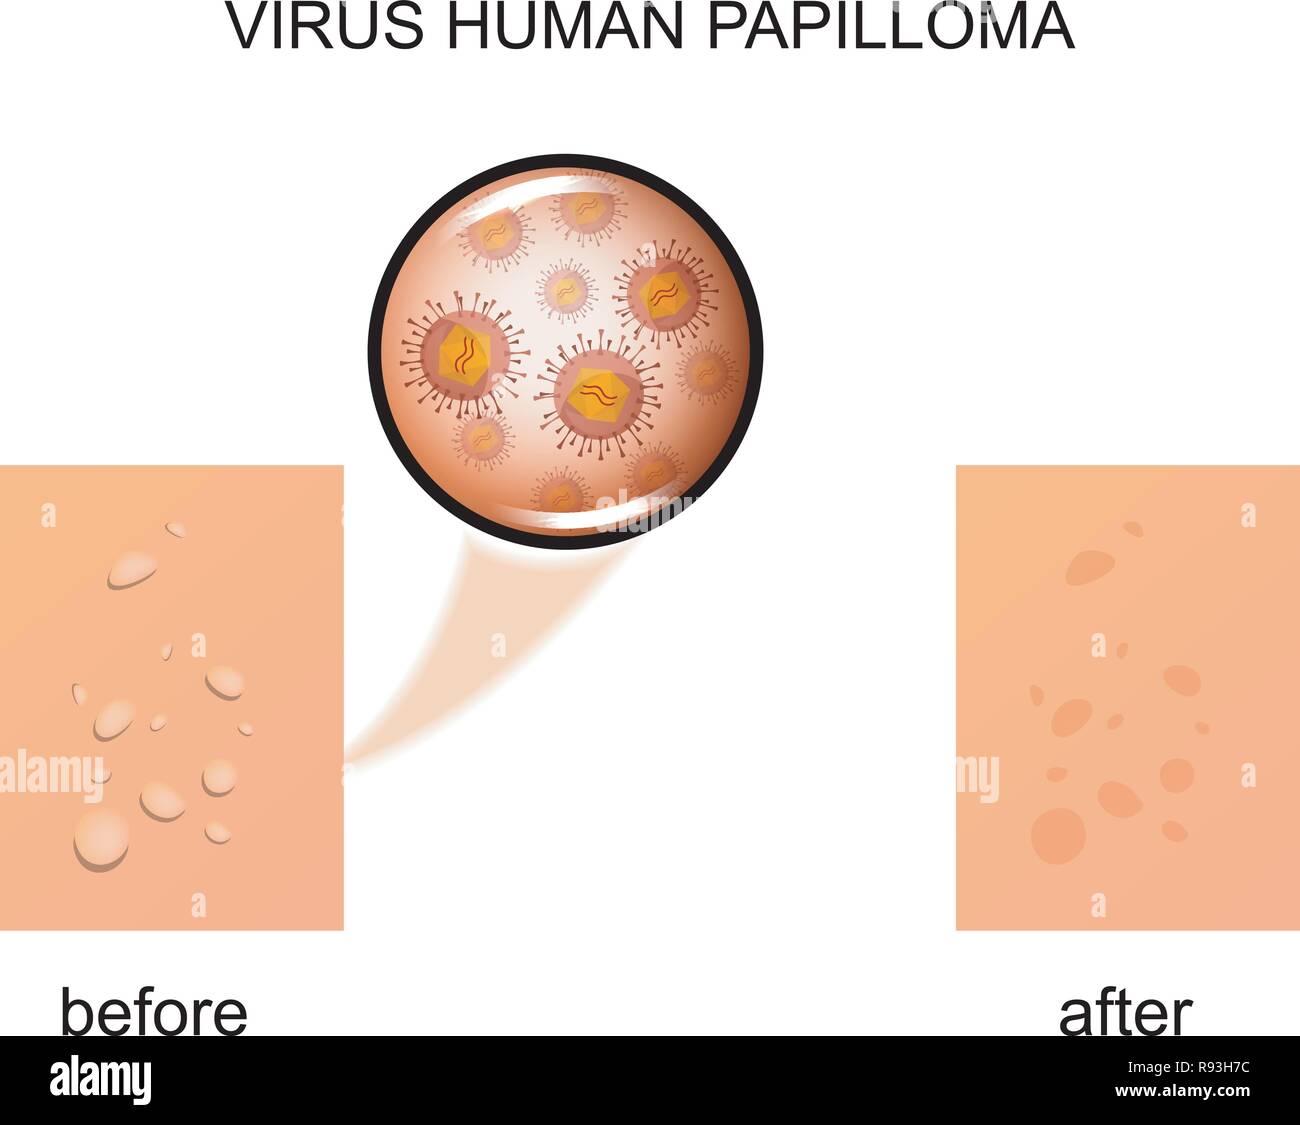 vector illustration of a human papilloma virus Stock Vector